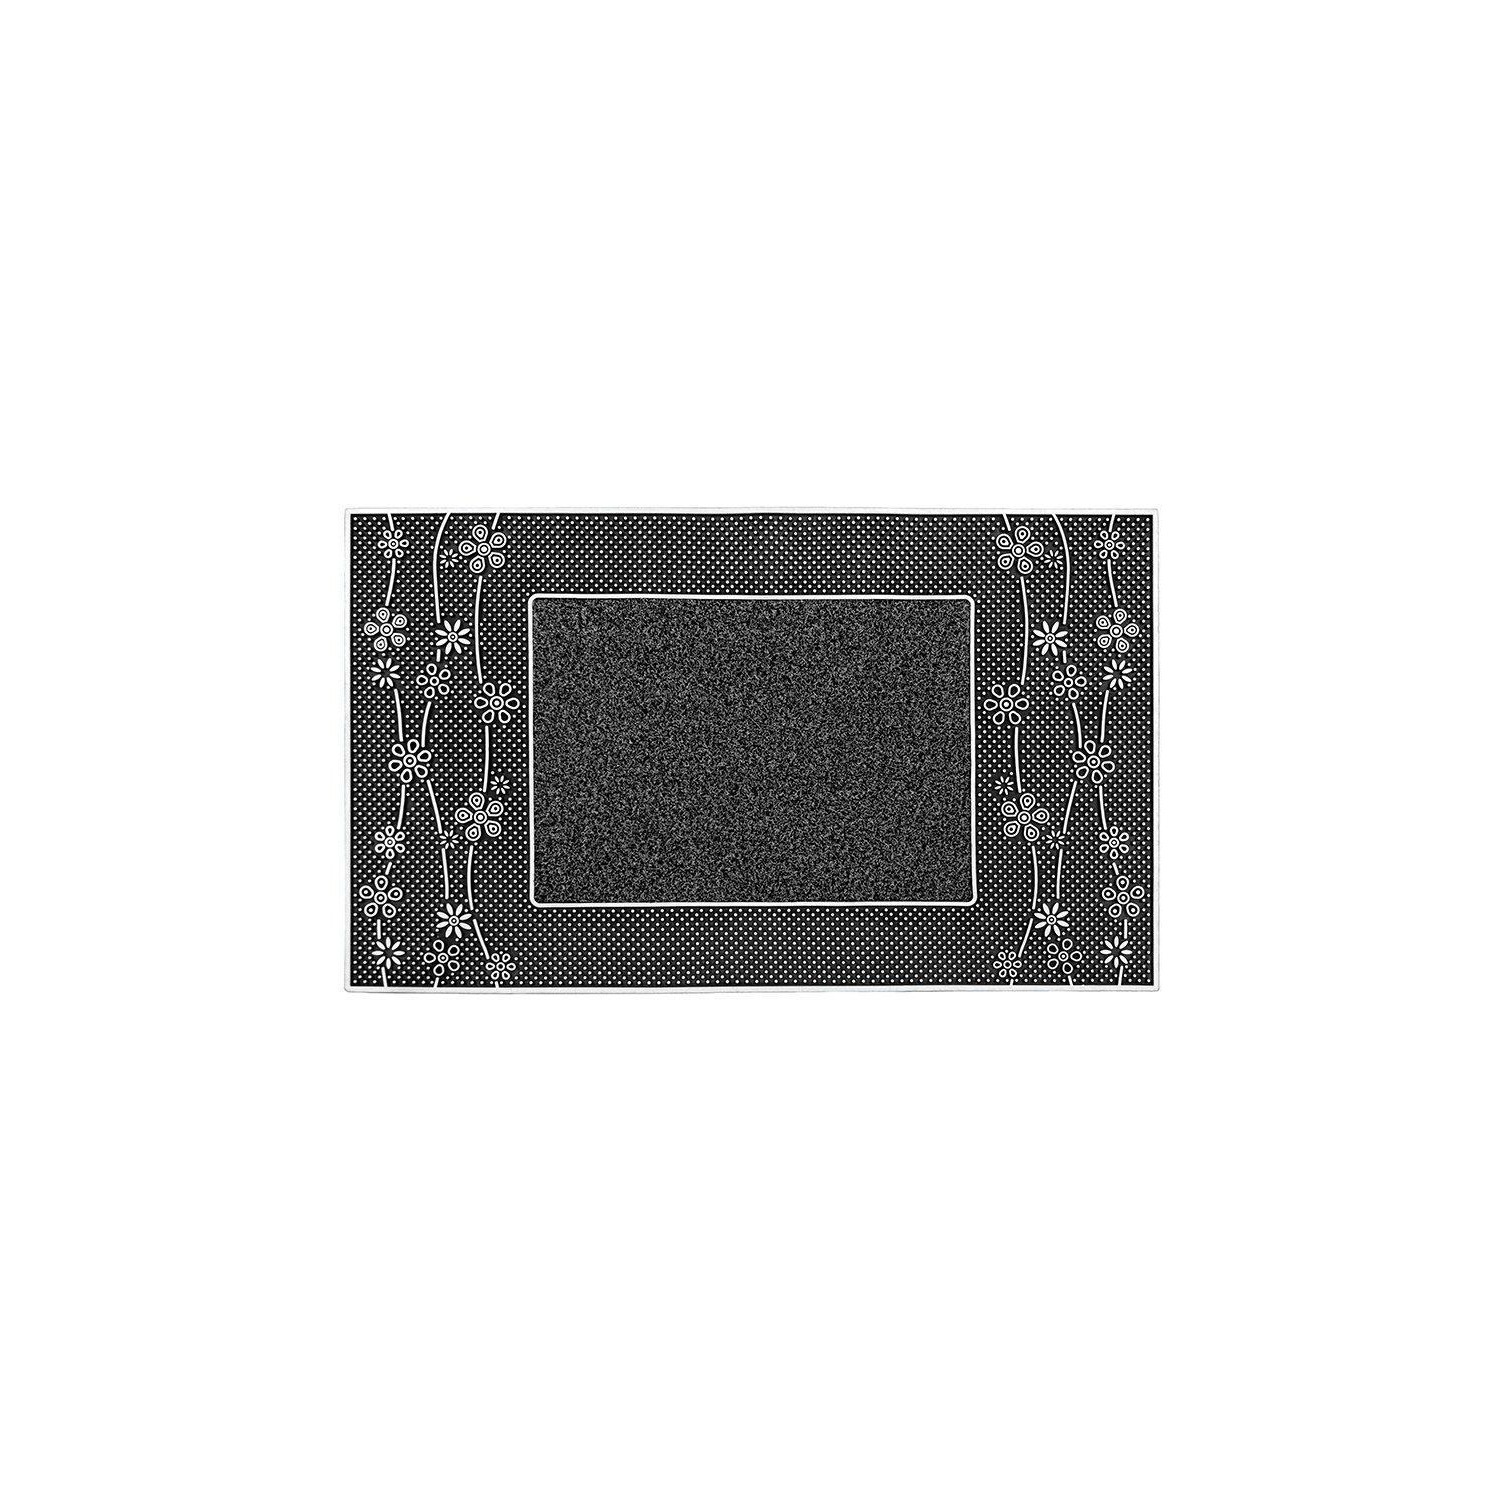 Daisy PVC Pin Scraper Doormat 45x75cm Silver - image 1